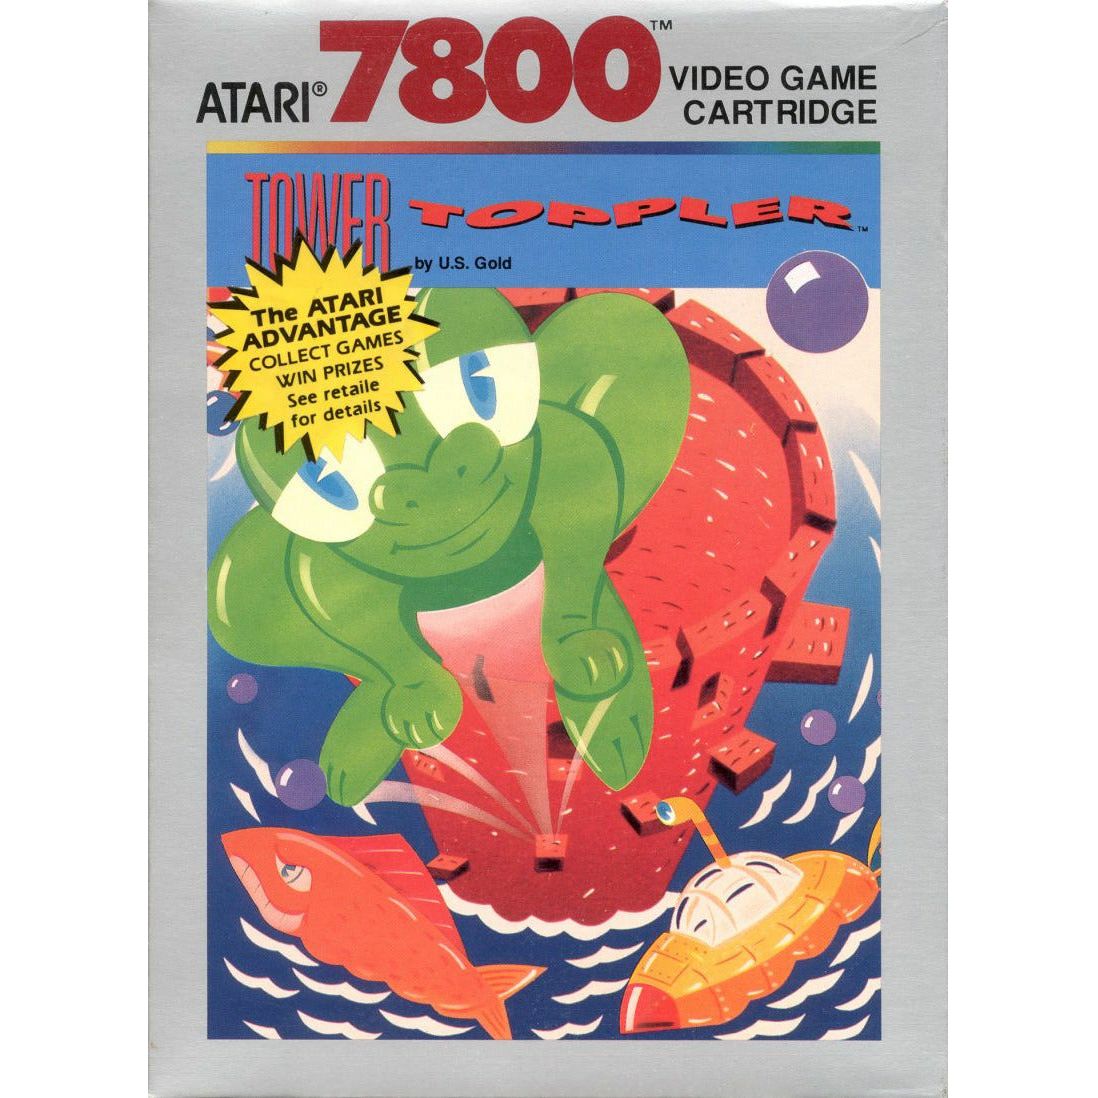 Atari 7800 - Tower Toppler (complet dans la boîte)